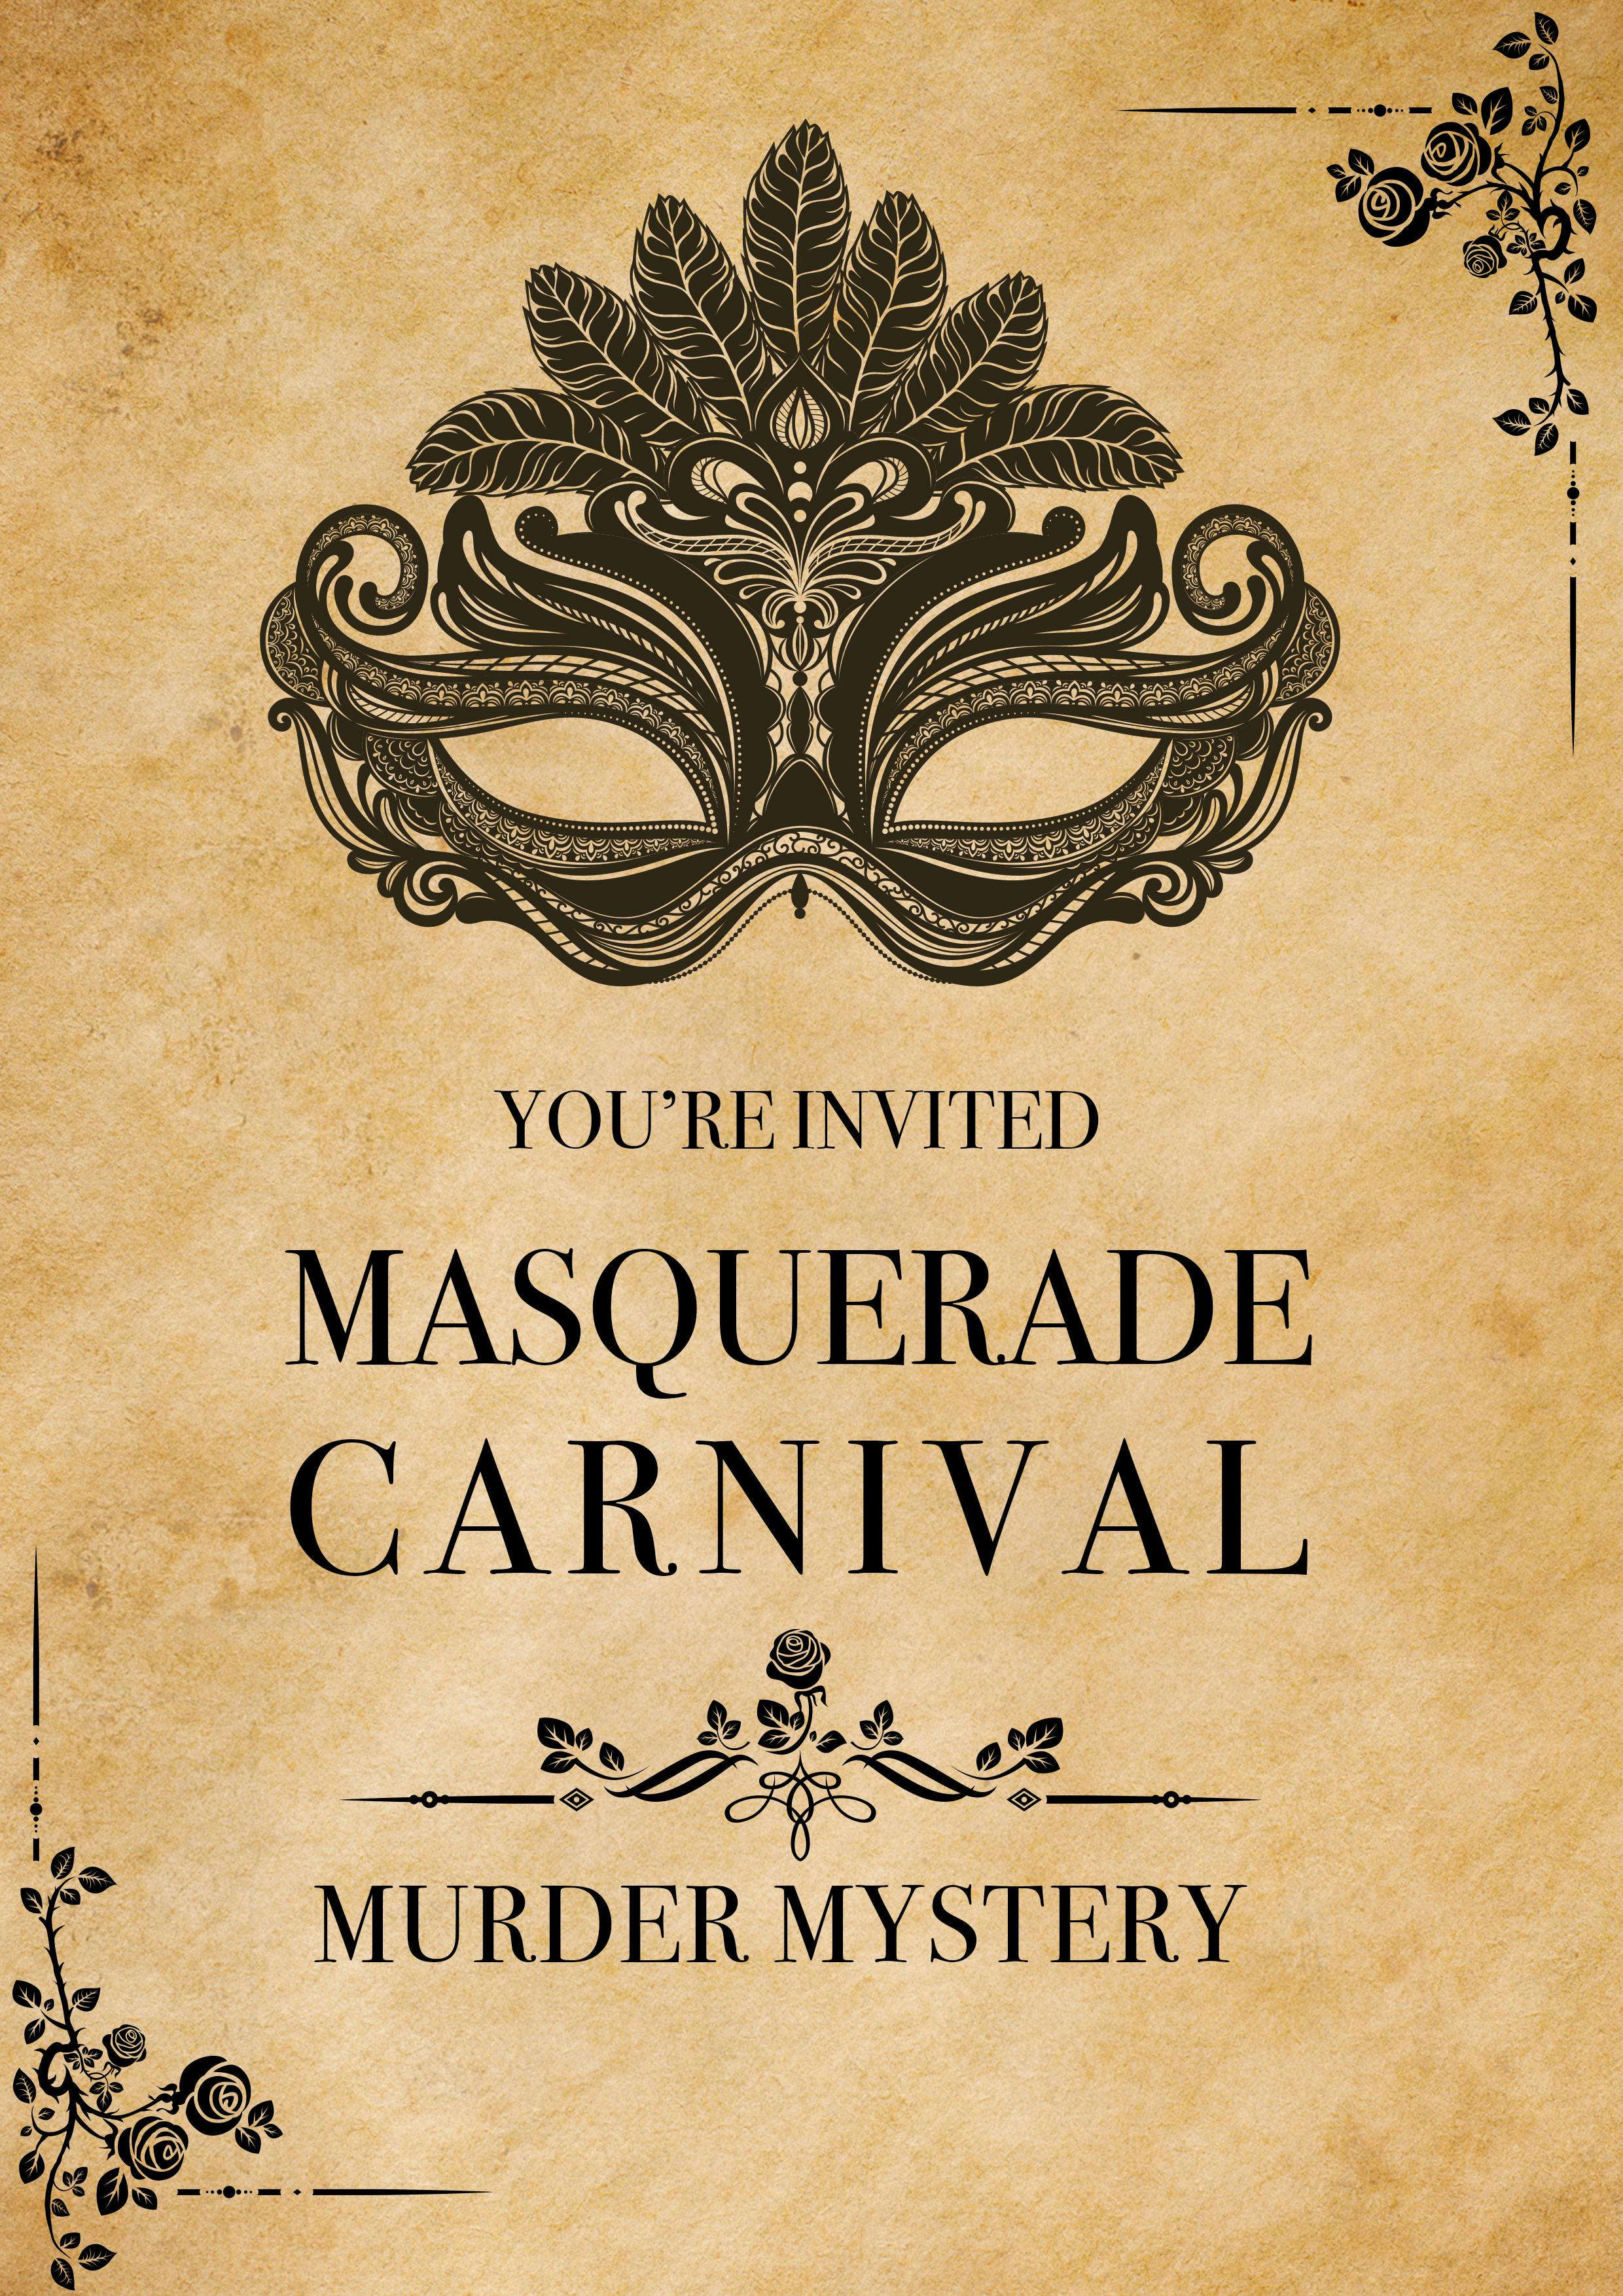 Masquerade_Invitation.jpg